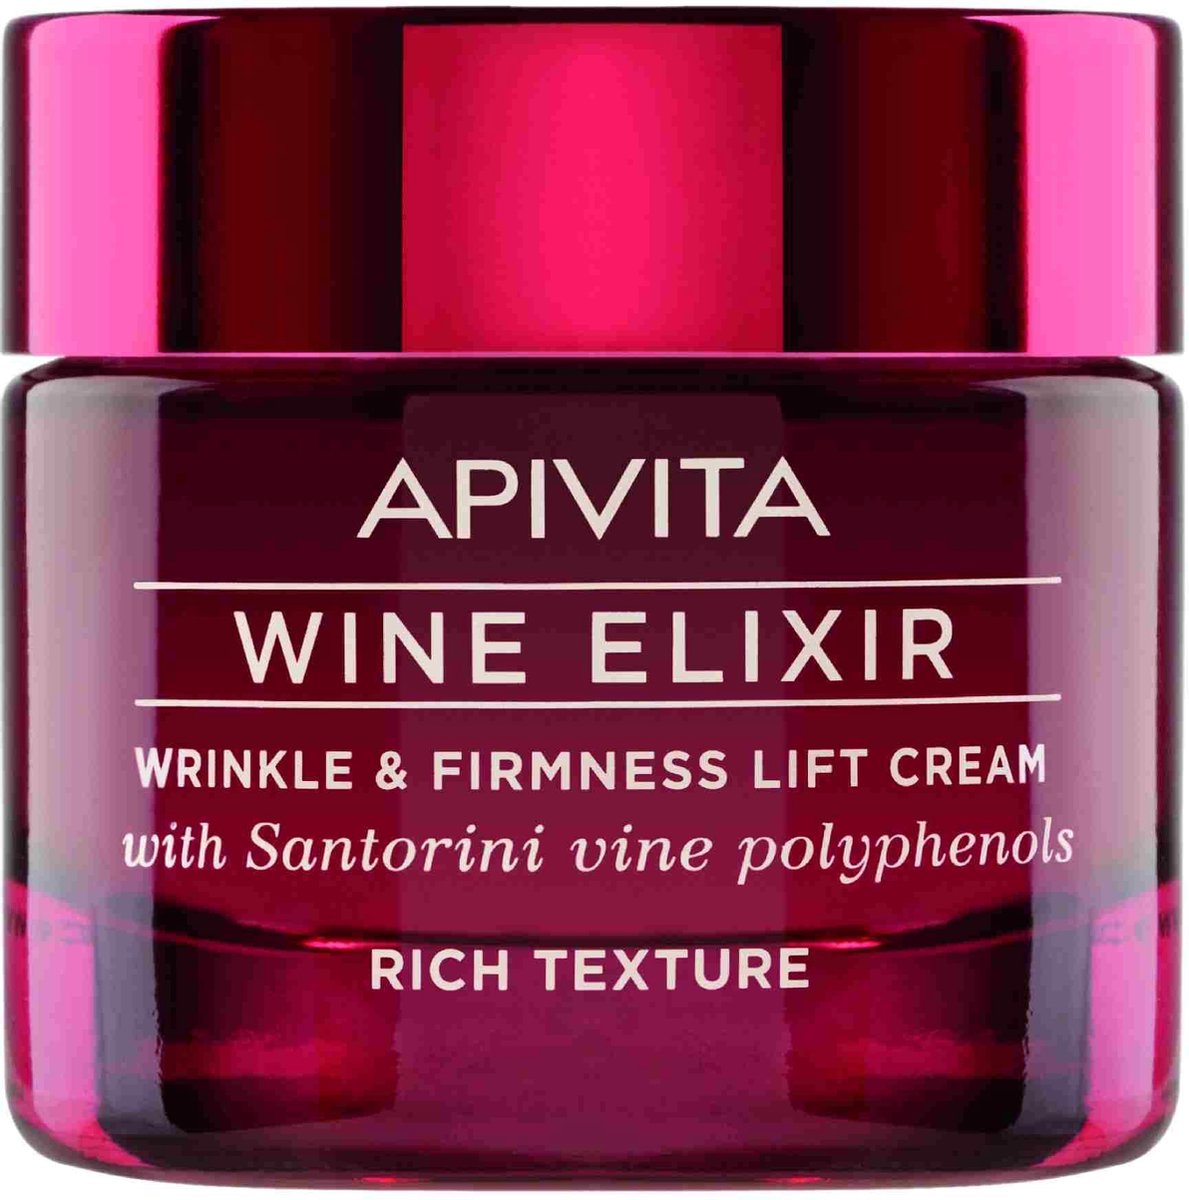 Apivita Wine Elixir Wrinkle & Firmness Lift Cream